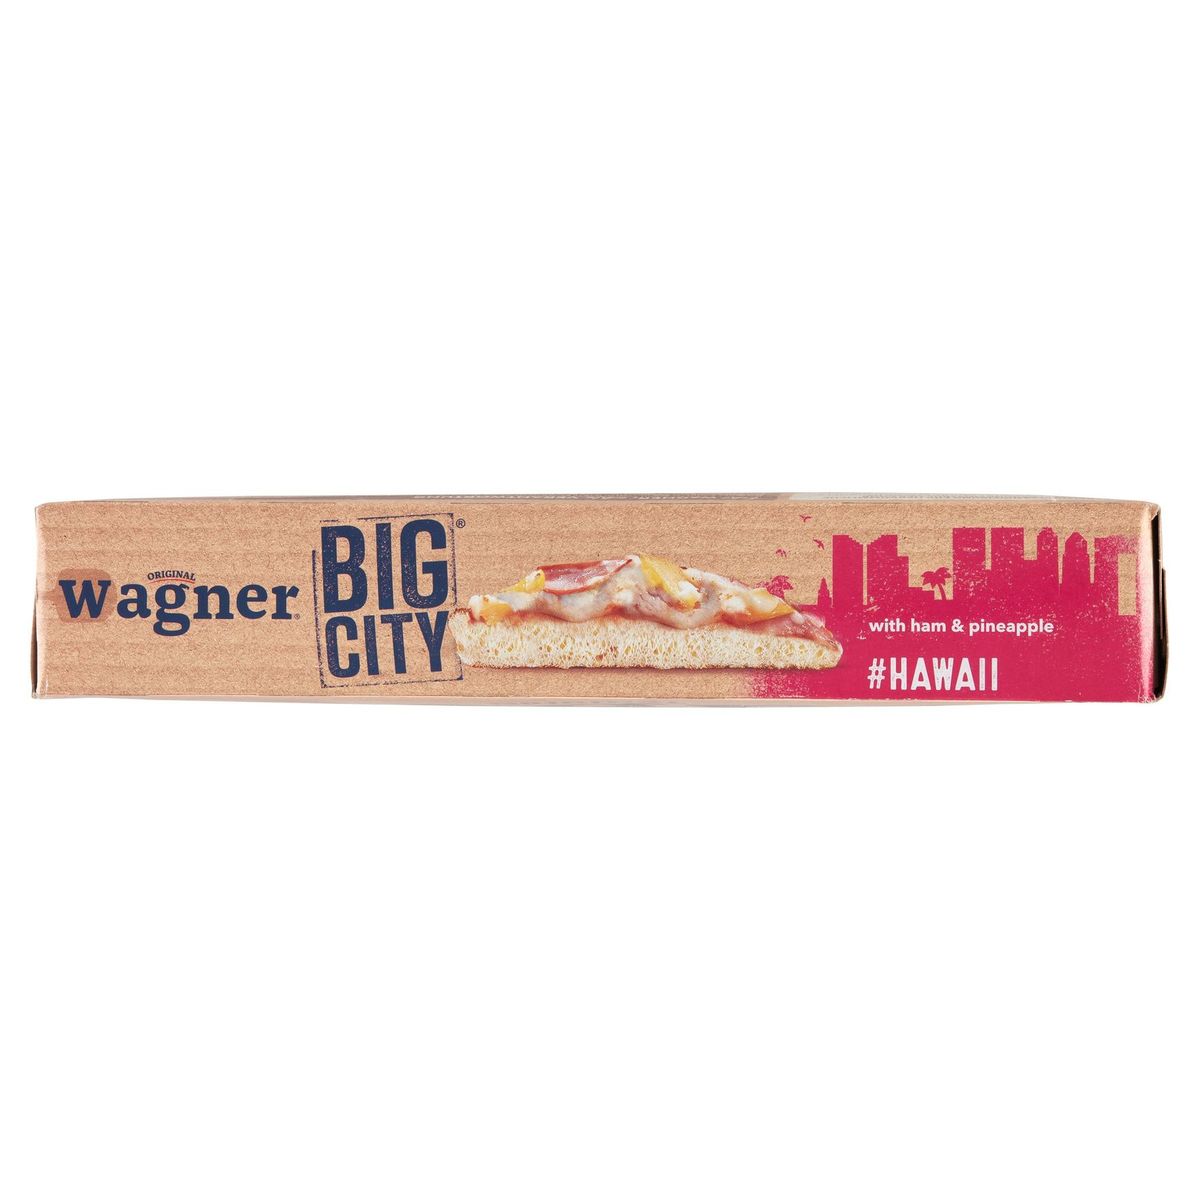 Original Wagner BIG city pizza hawaii ananas ham 435 g